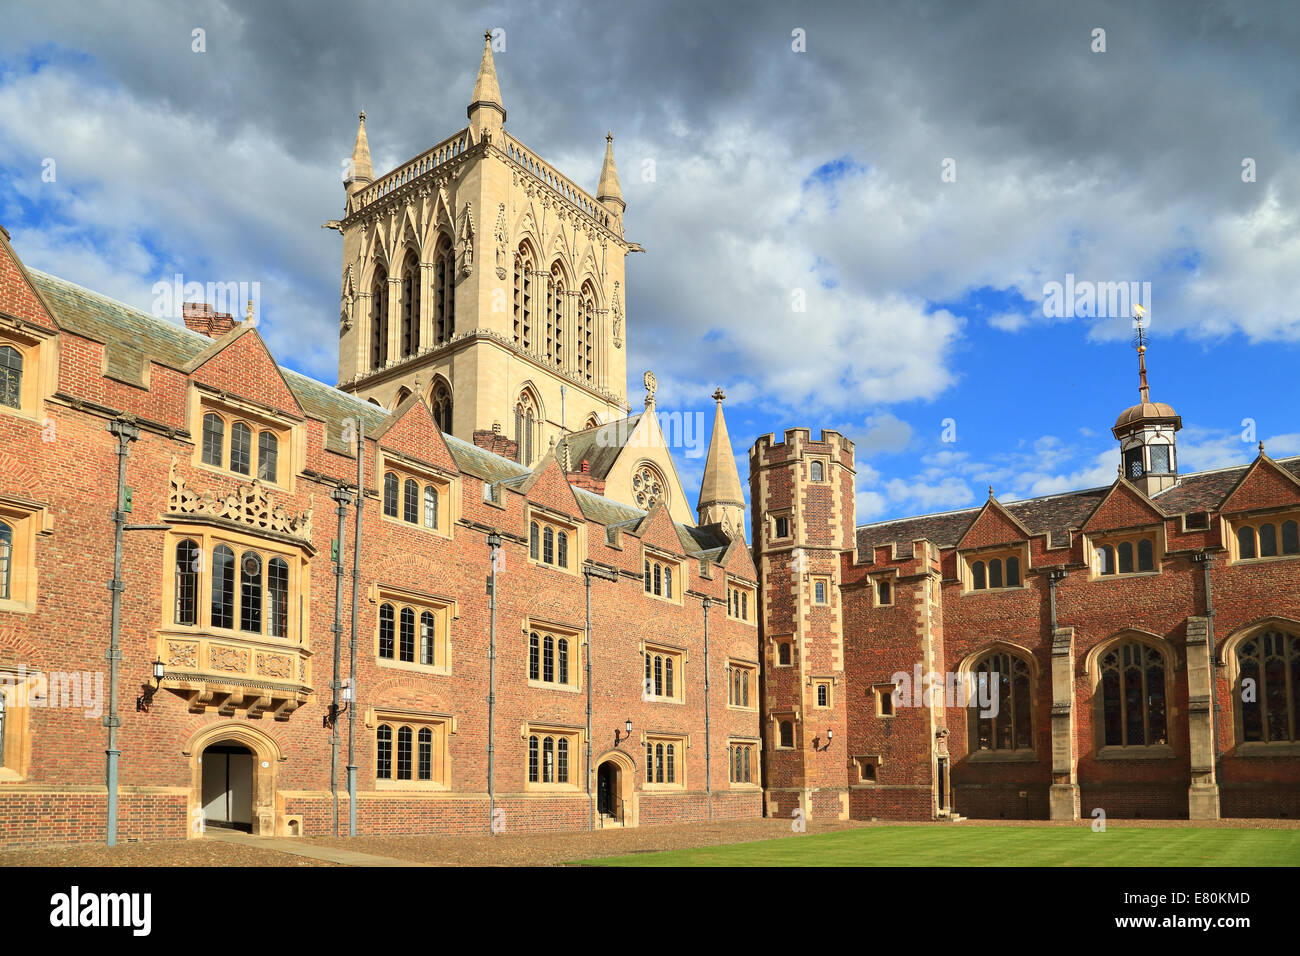 St John's college, Cambridge, UK. Stock Photo